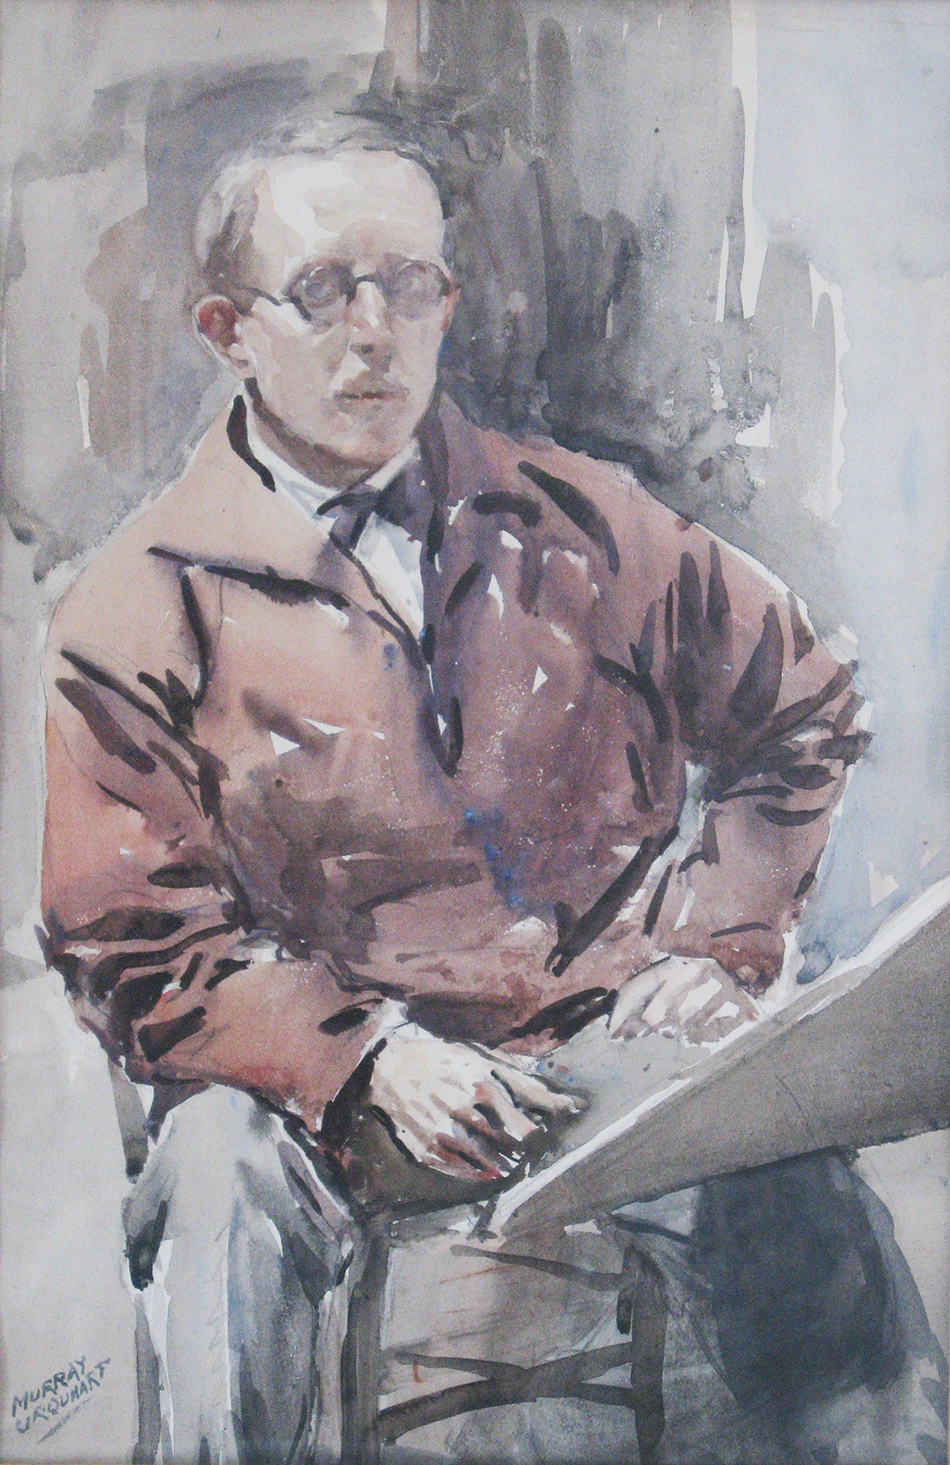 Self-portrait by Murray Urquhart, circa 1930